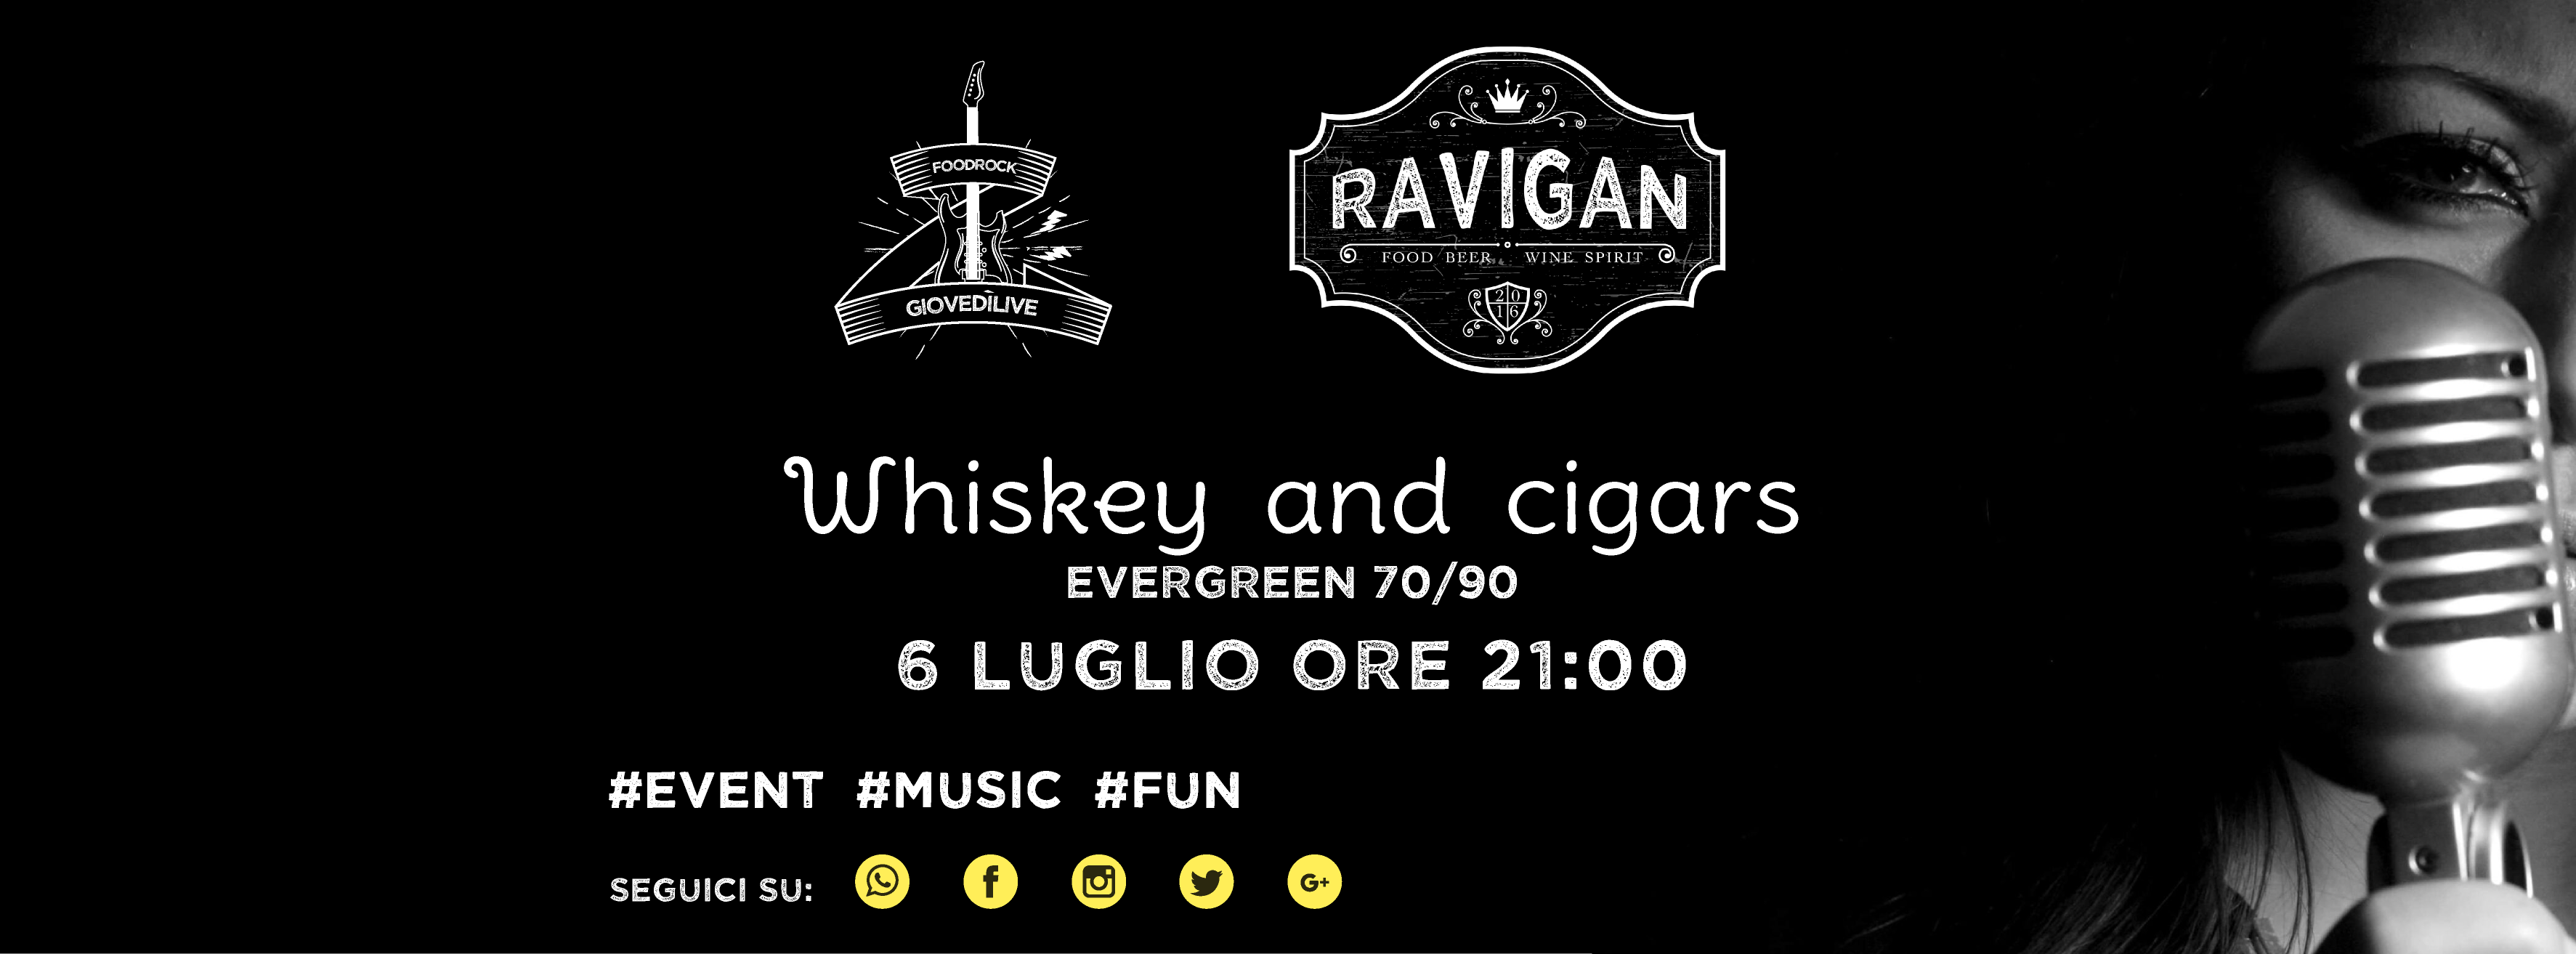 Whiskey’n’Cigars live al Ravigan Whiskey’n’Cigars prossimi ospiti del Ristopub